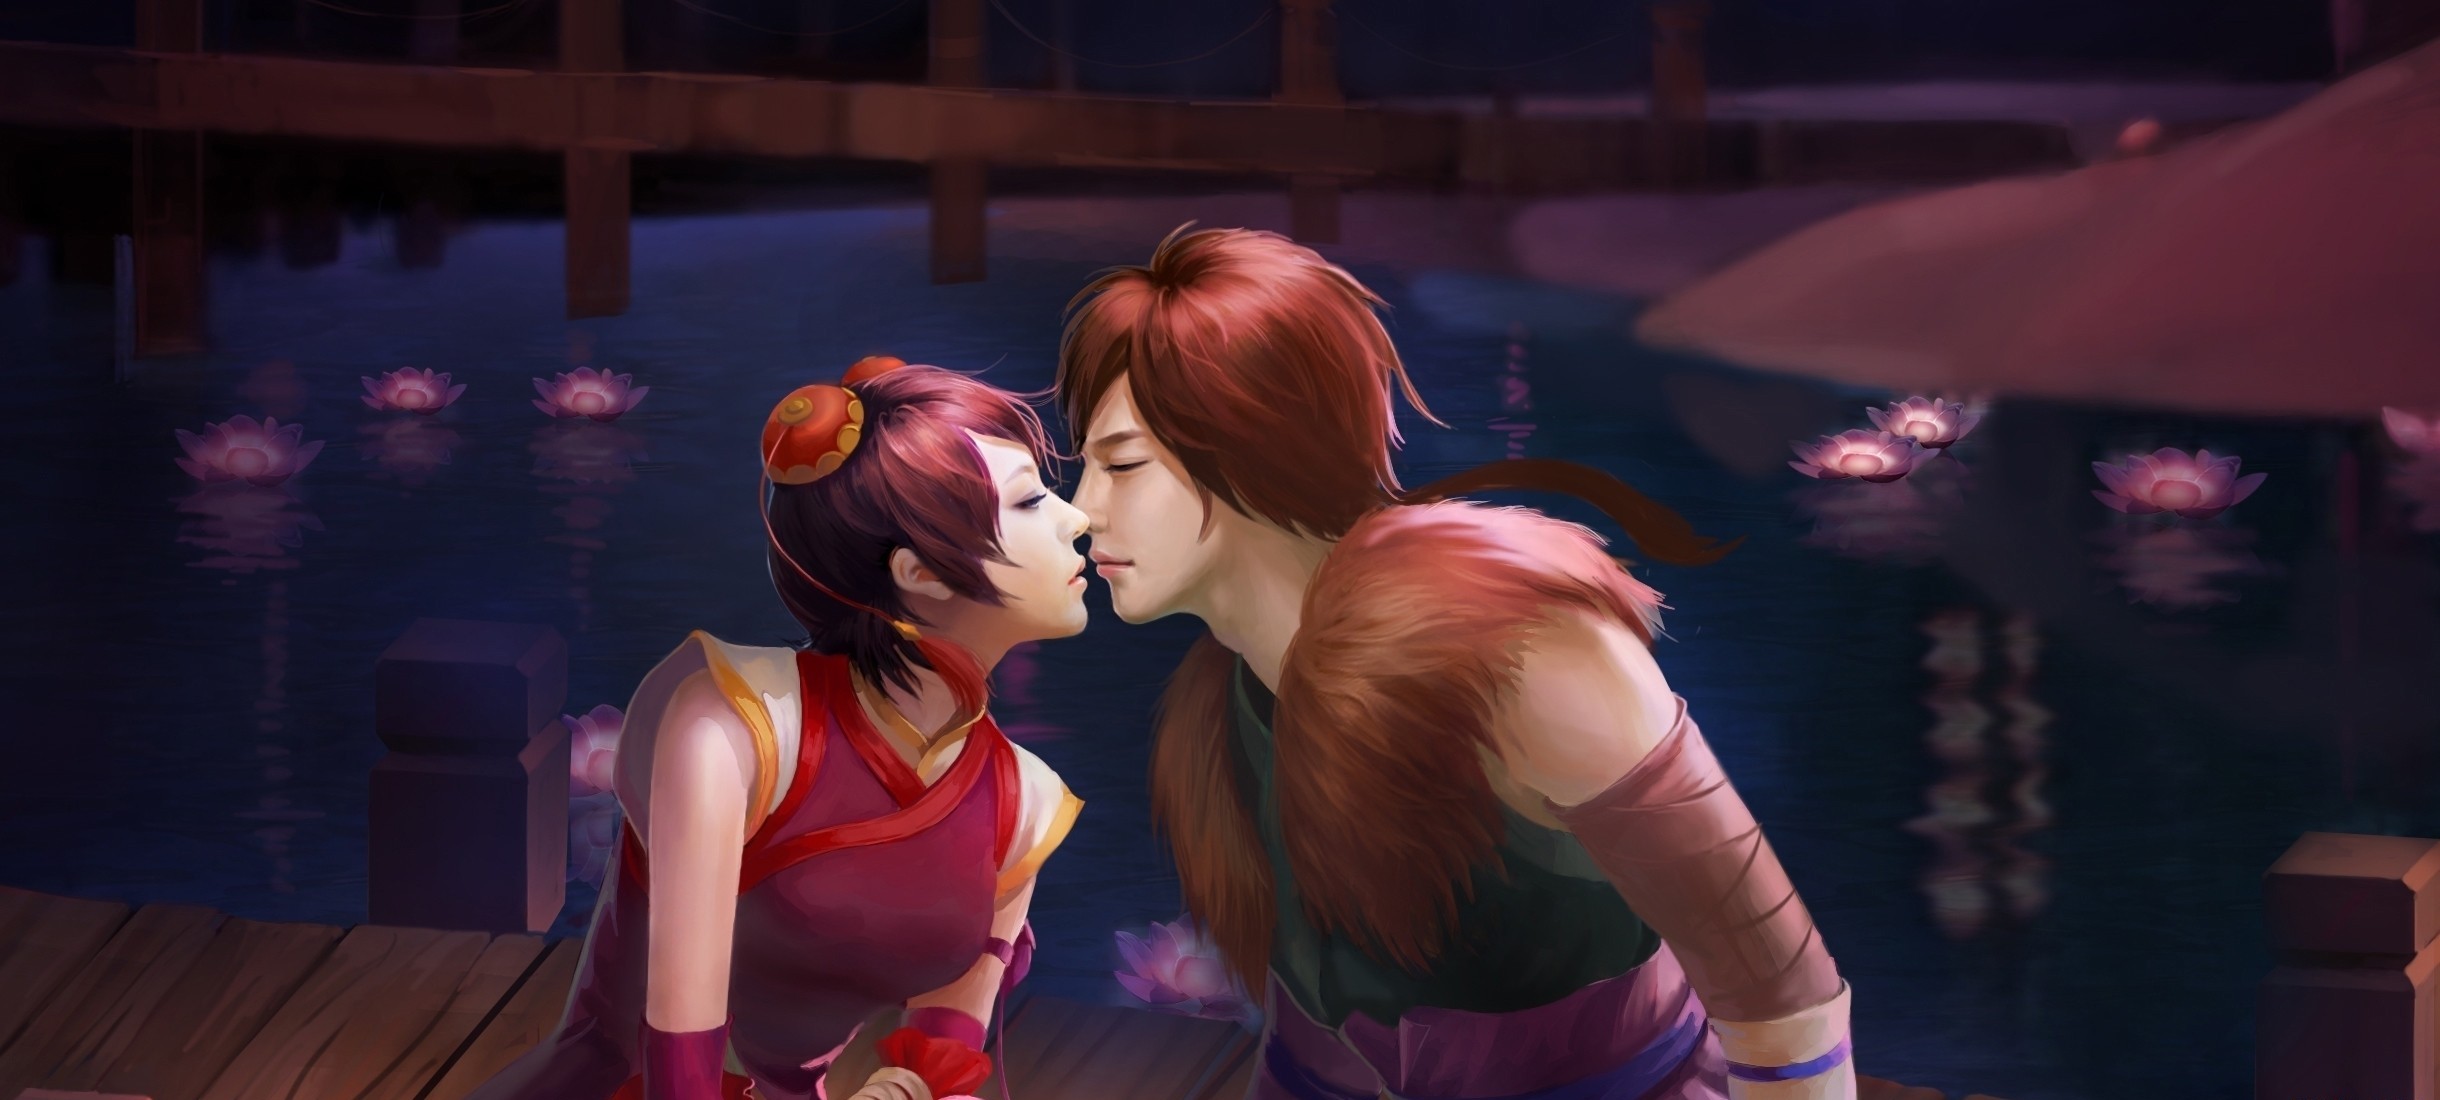 love, kiss, fantasy, water lily 8K